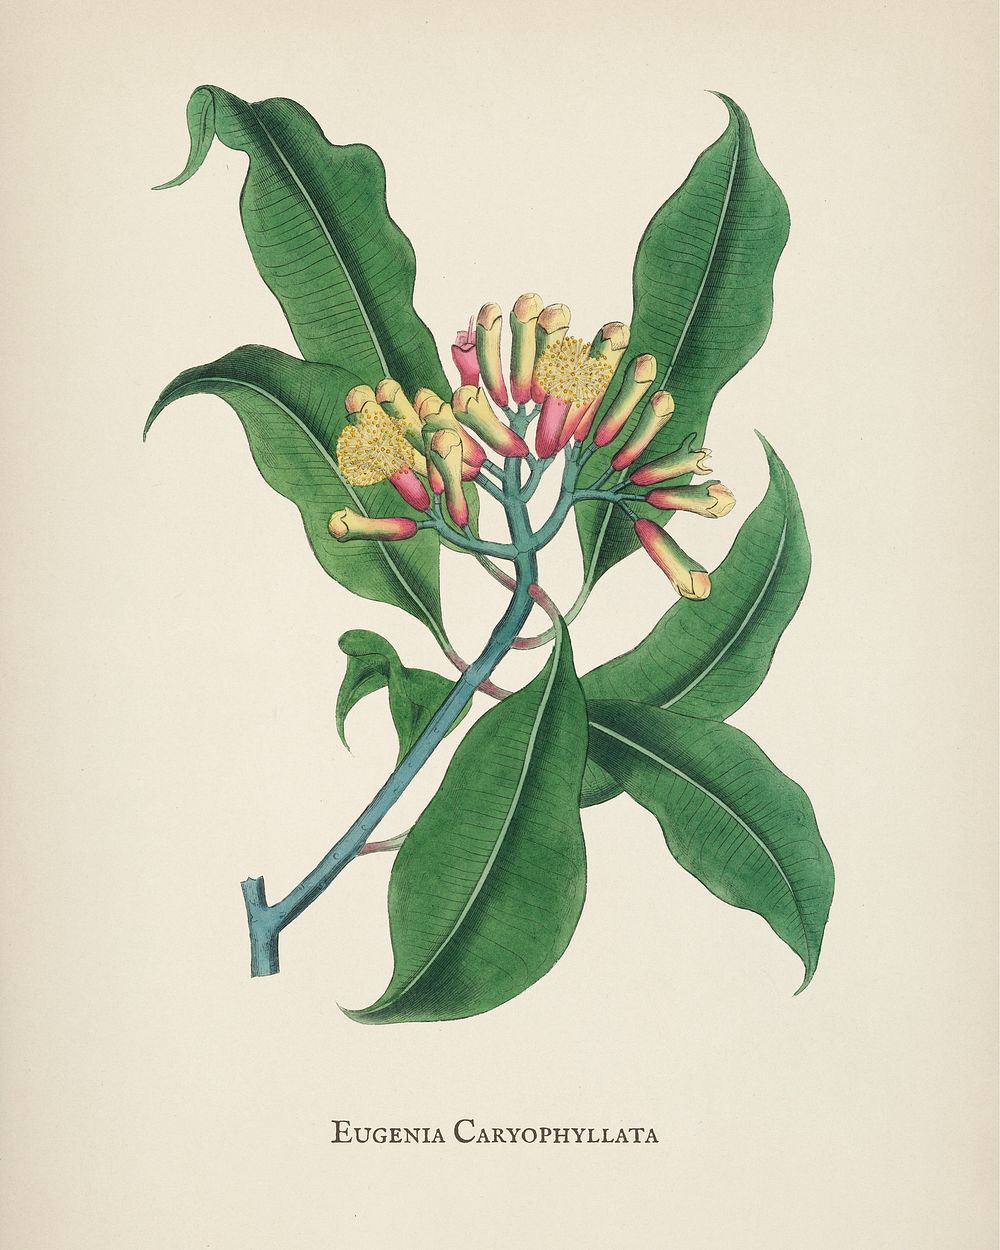 Cloves (Eugenia caryophyllata) illustration from Medical Botany (1836) by John Stephenson and James Morss Churchill.